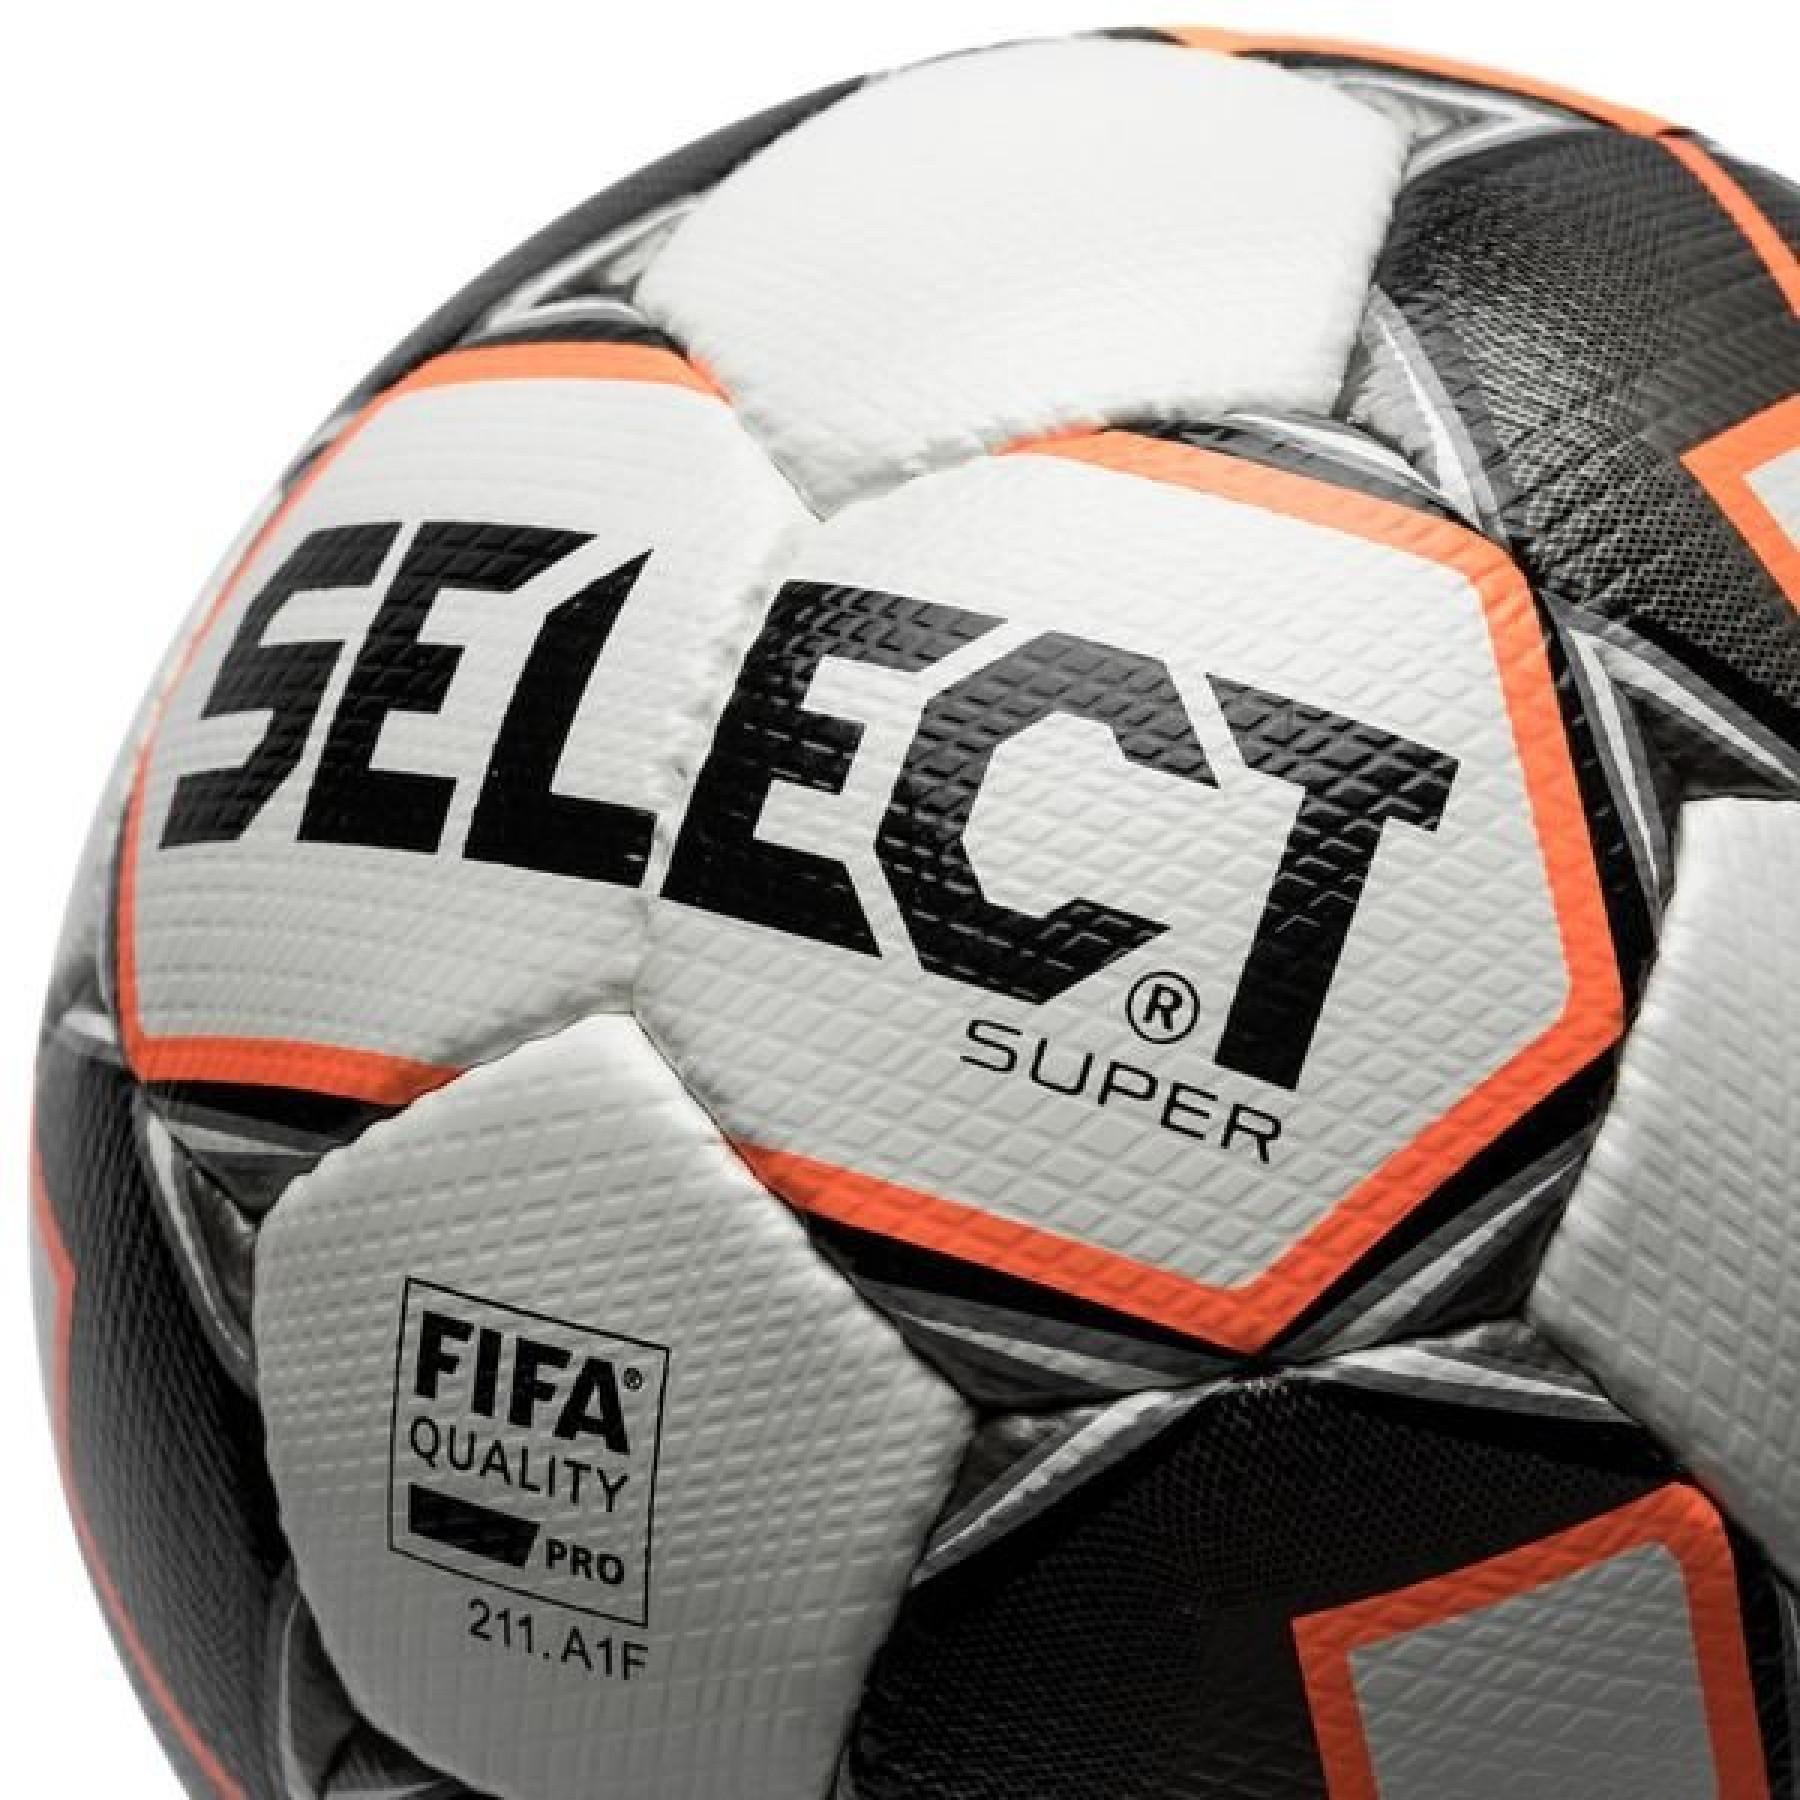 Select FIFA Super